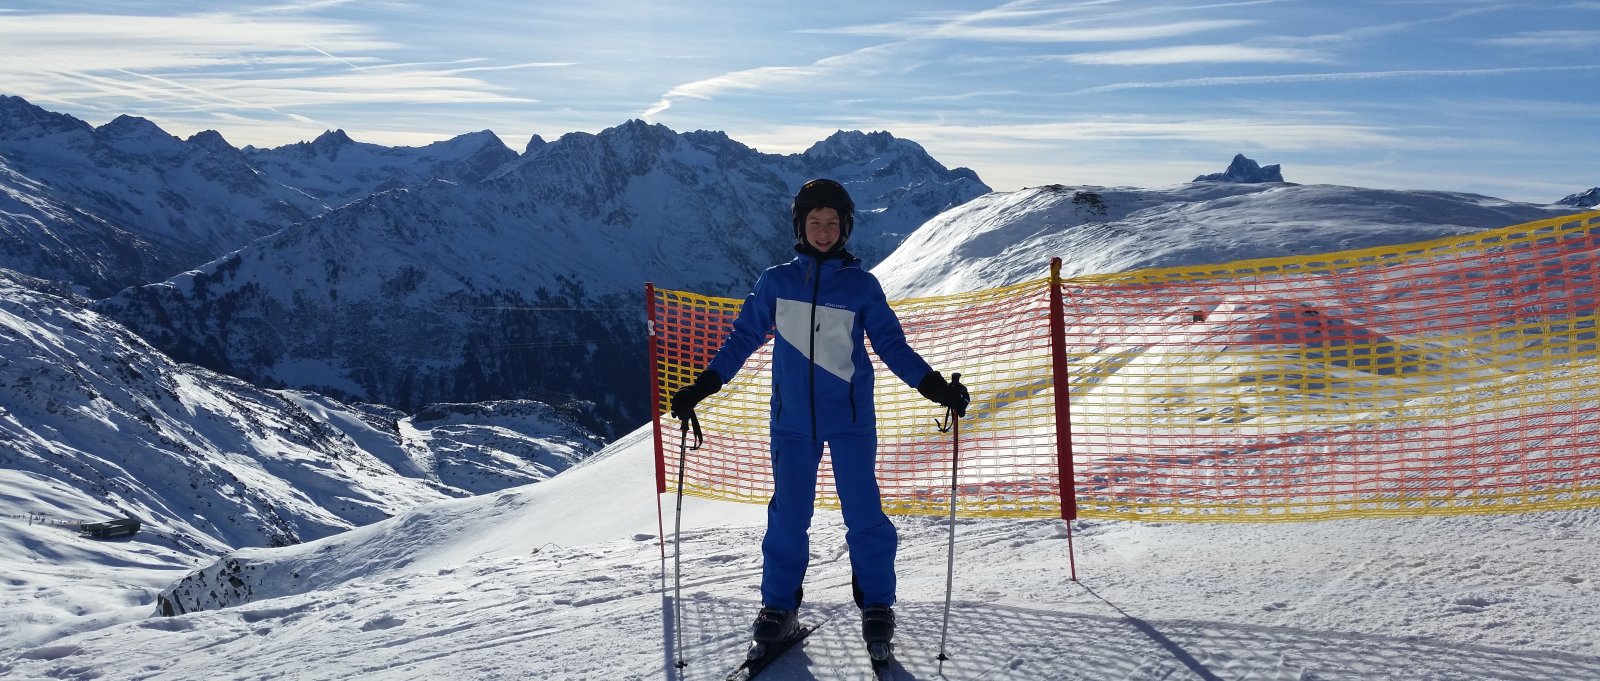 skifahren-deutschland-skikurse-alpen-berge-skiausflug